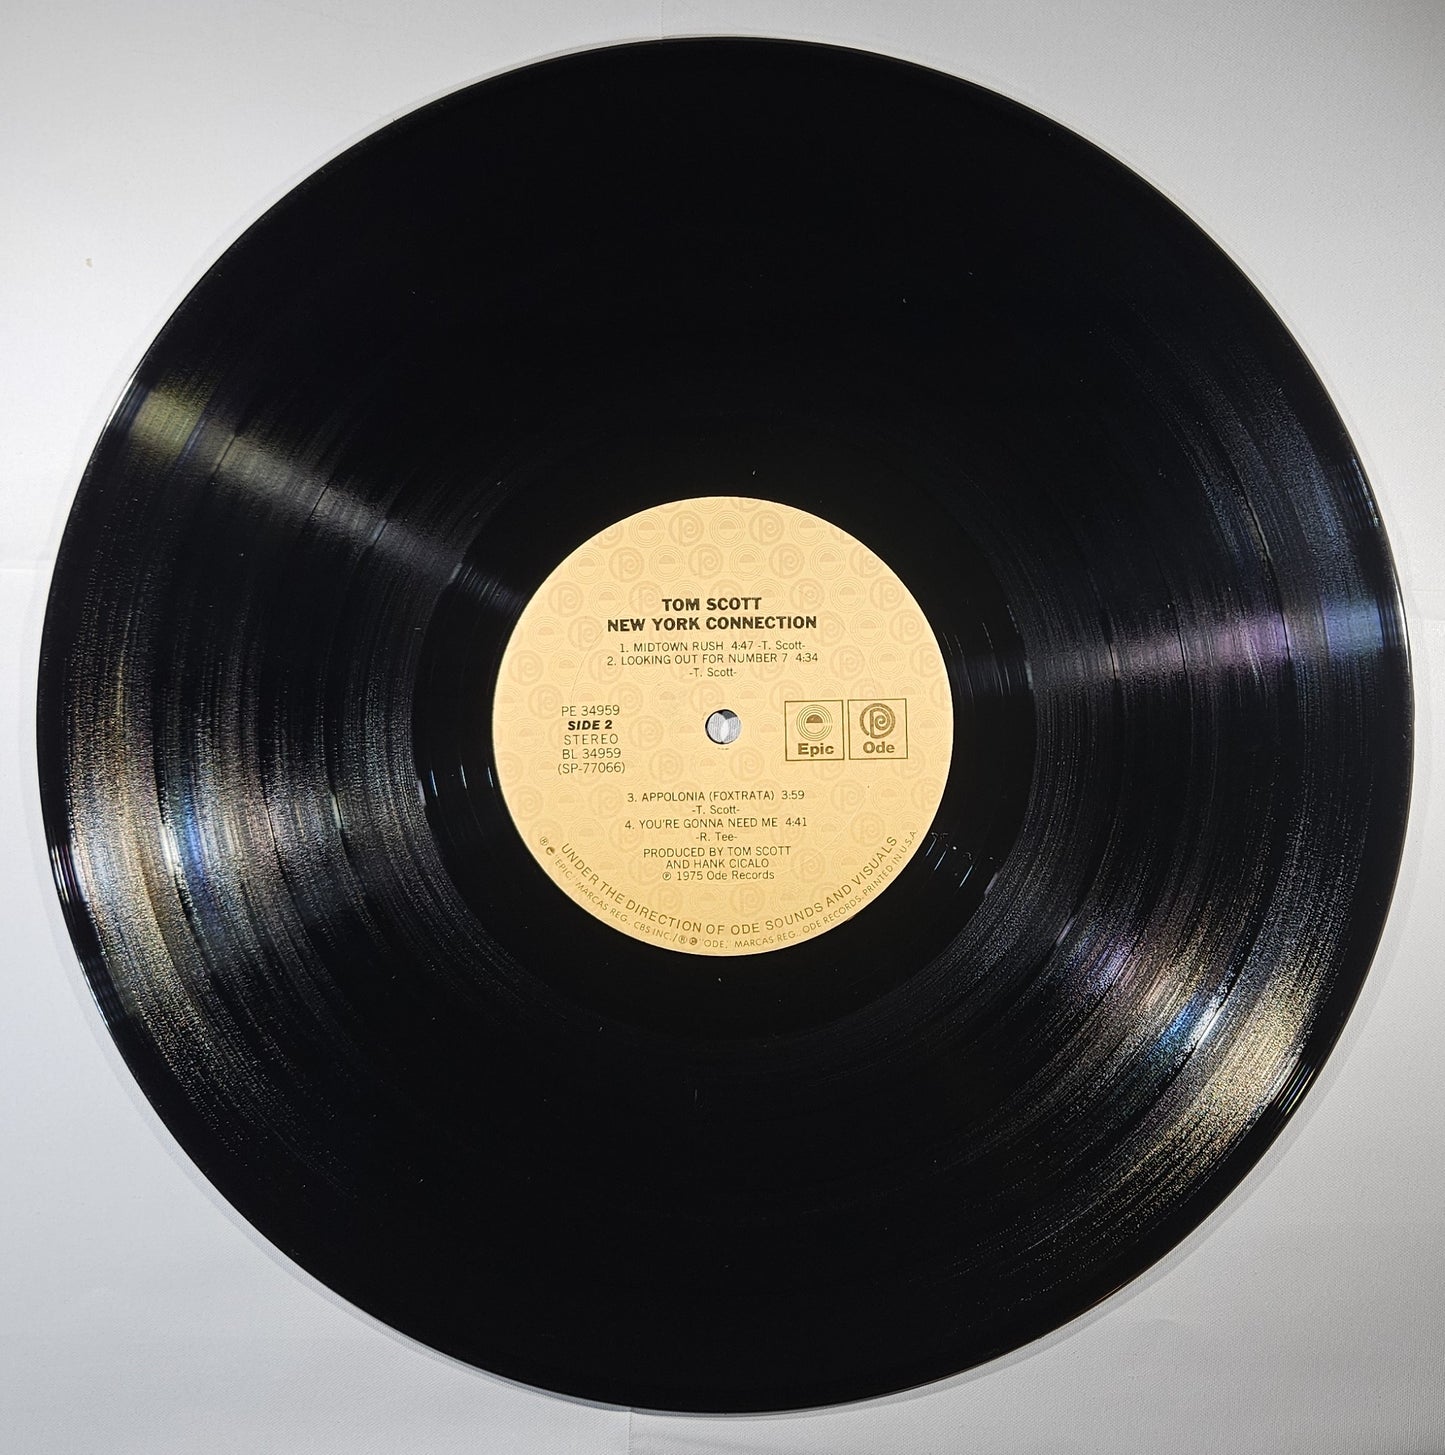 Tom Scott - New York Connection [Reissue] [Used Vinyl Record LP] [B]